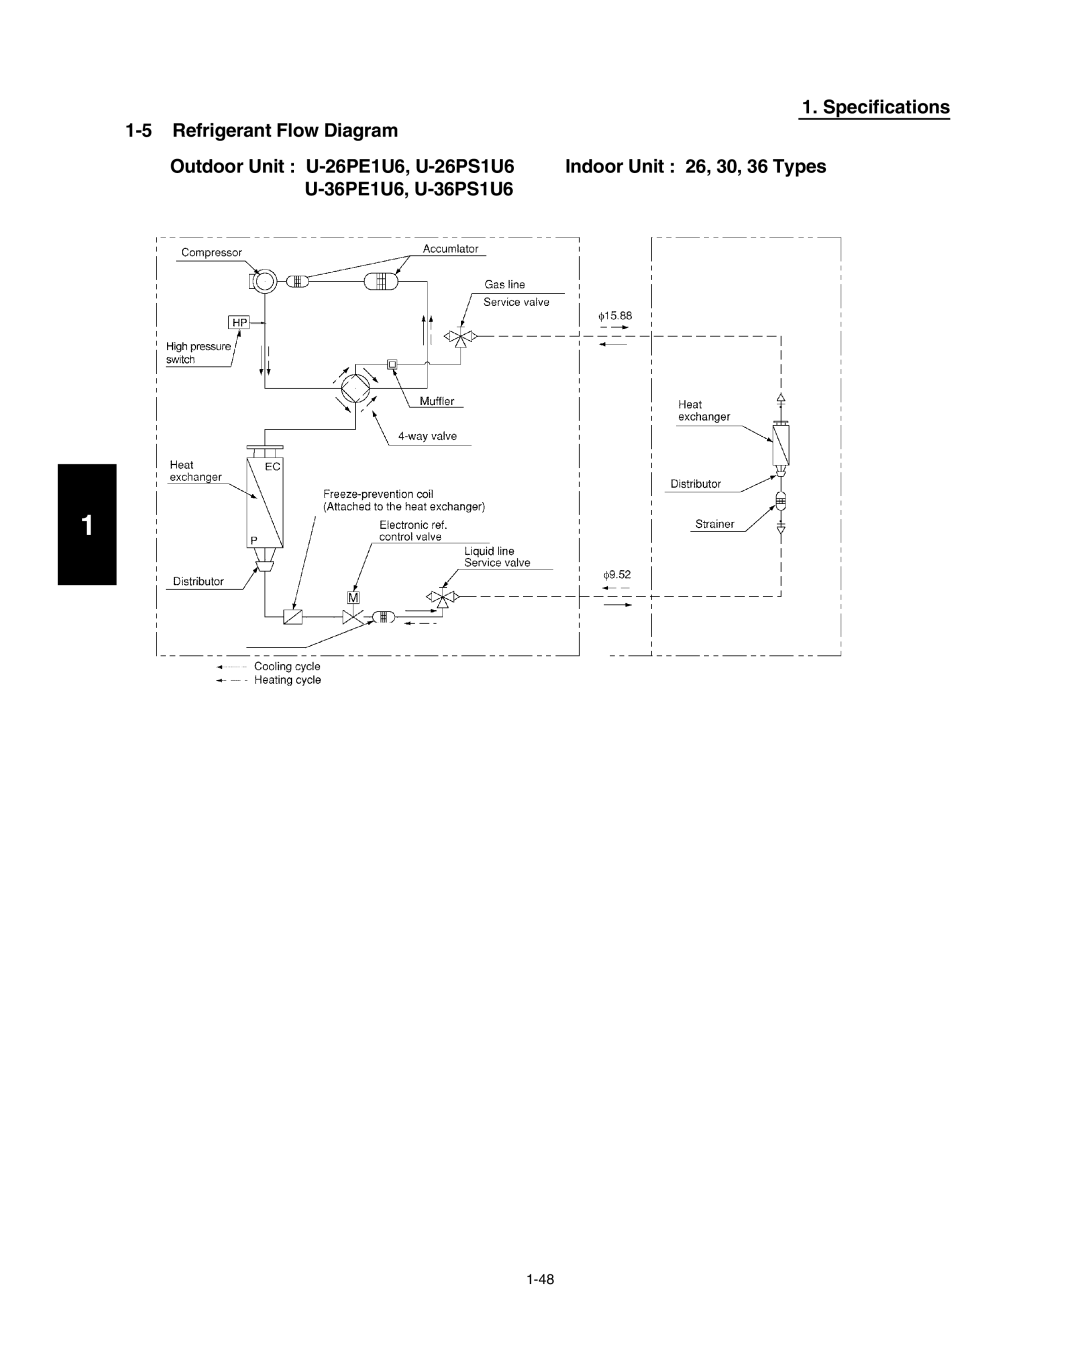 Panasonic R410A 1-5Refrigerant Flow Diagram, Outdoor Unit : U-26PE1U6, U-26PS1U6, Indoor Unit : 26, 30, 36 Types 